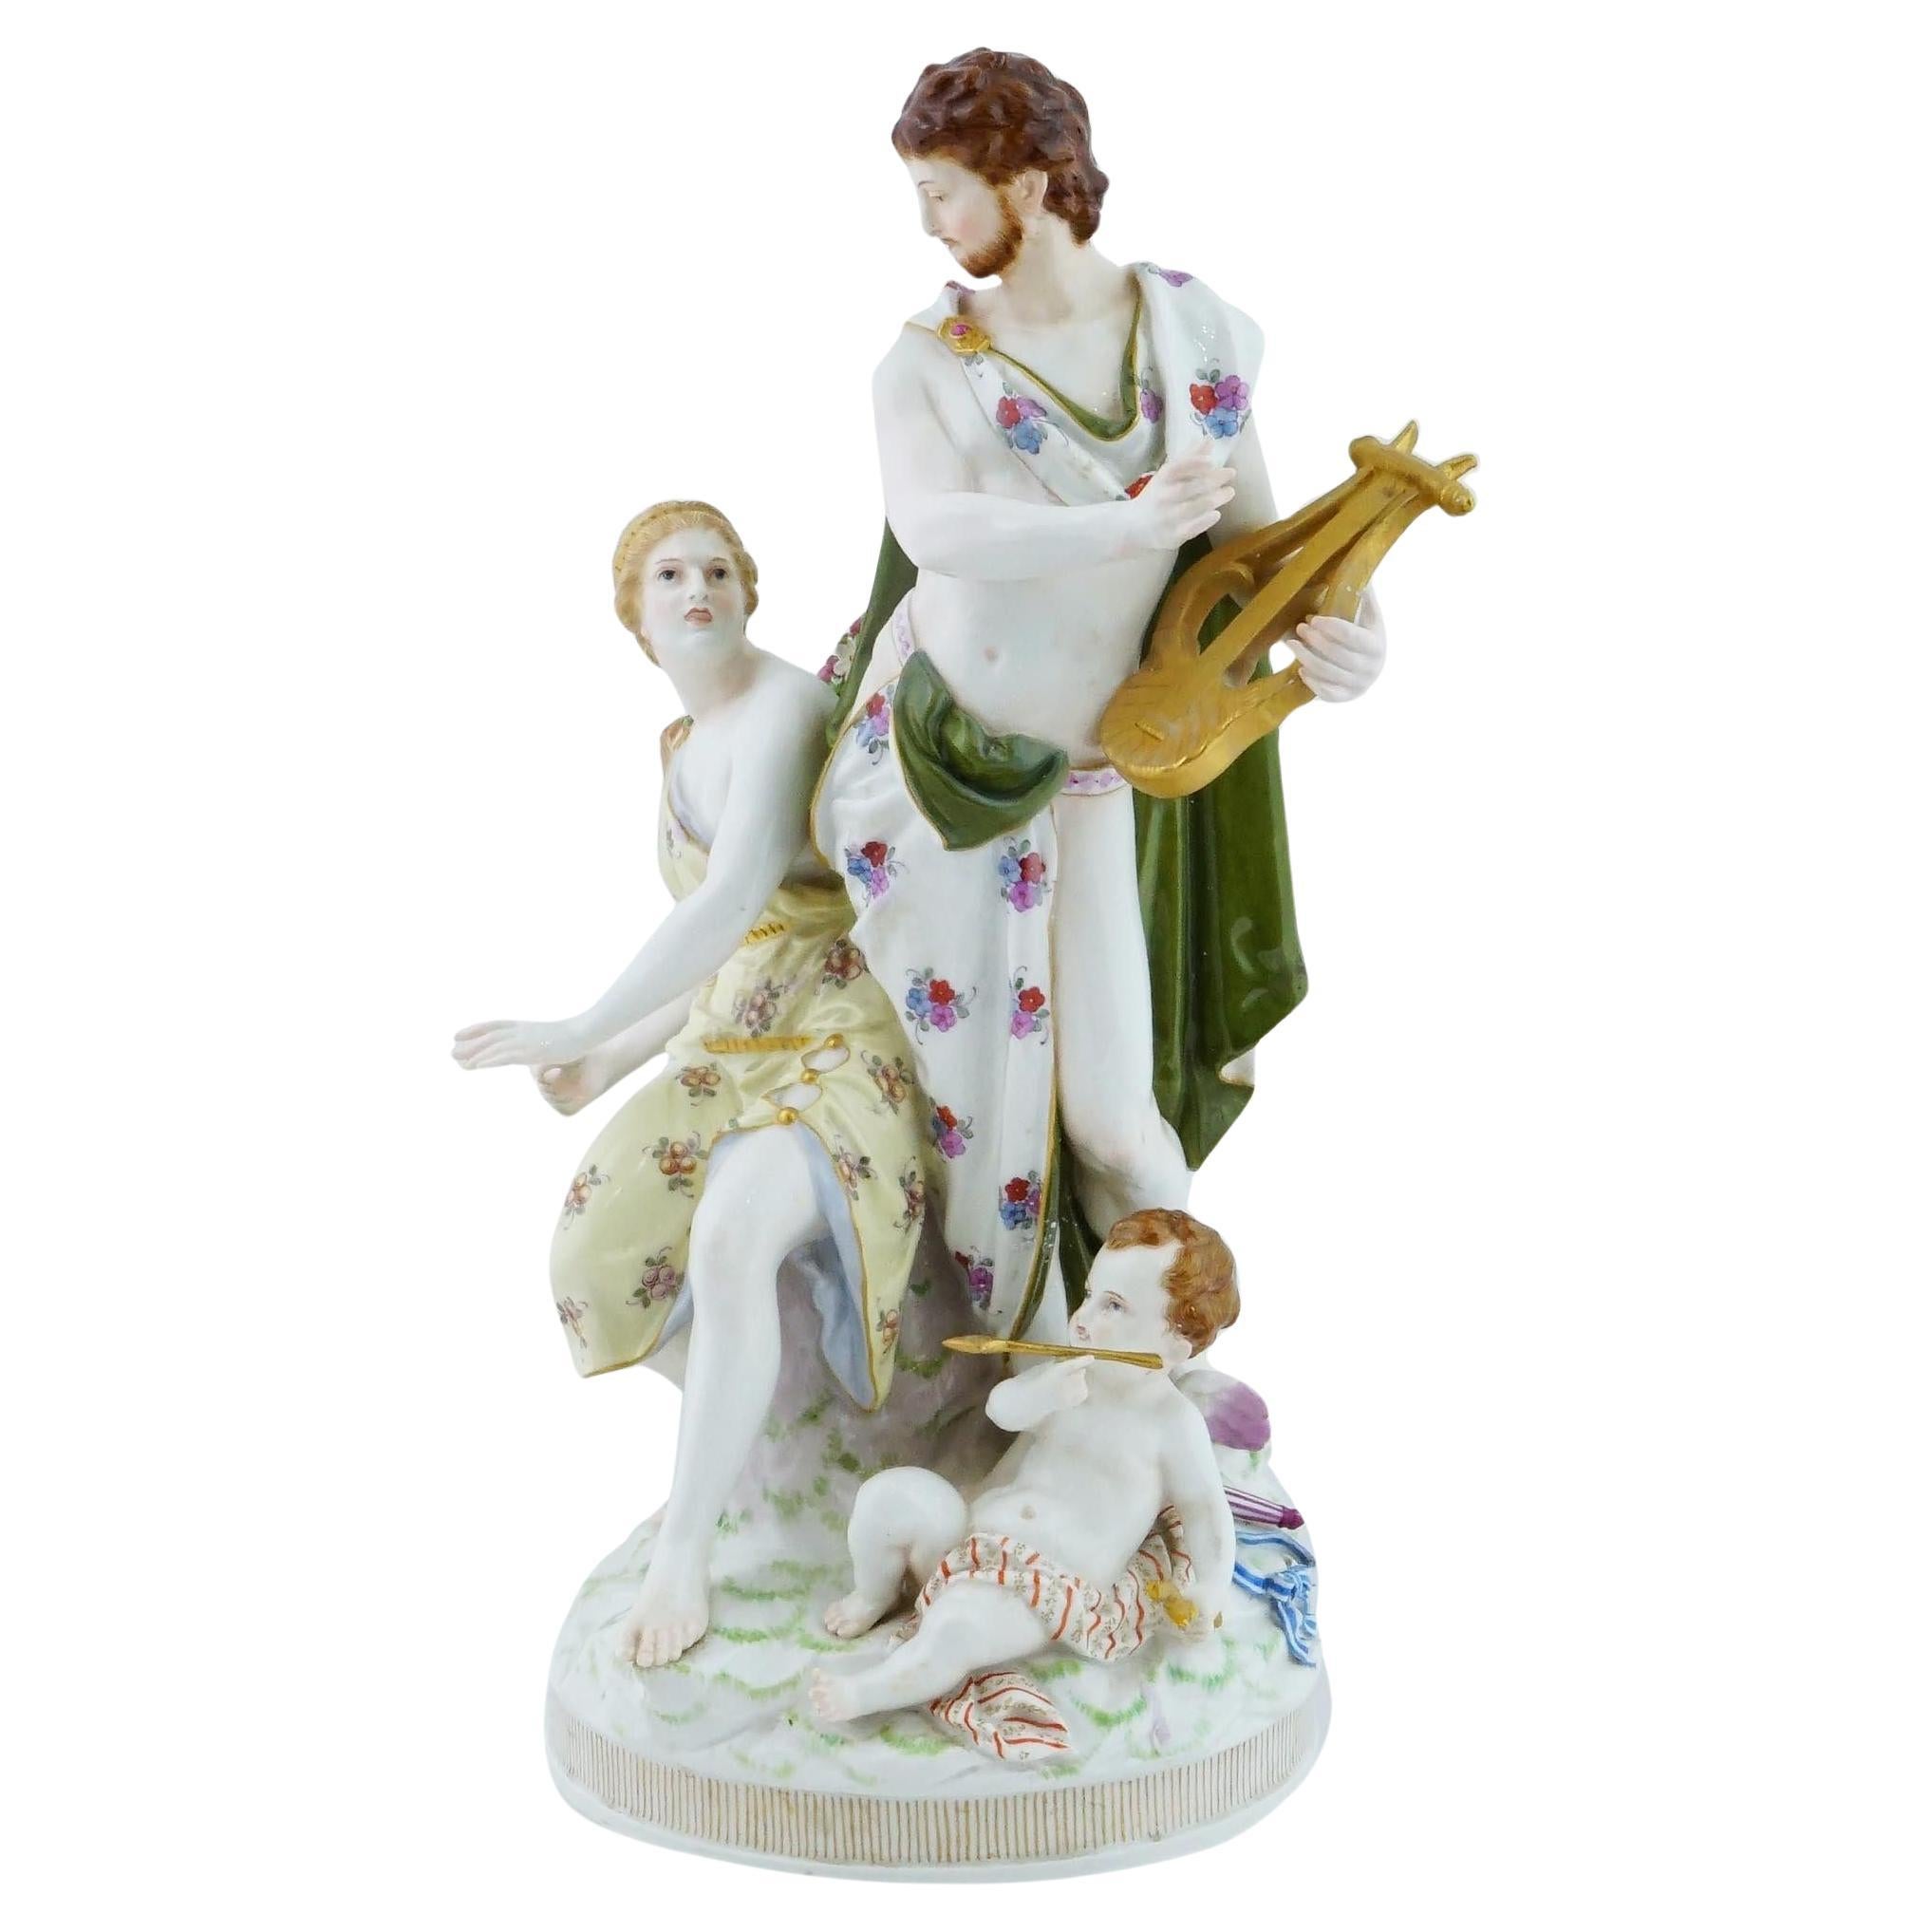 KPM Porcelain Figurine Depicting Orpheus and Eurydice